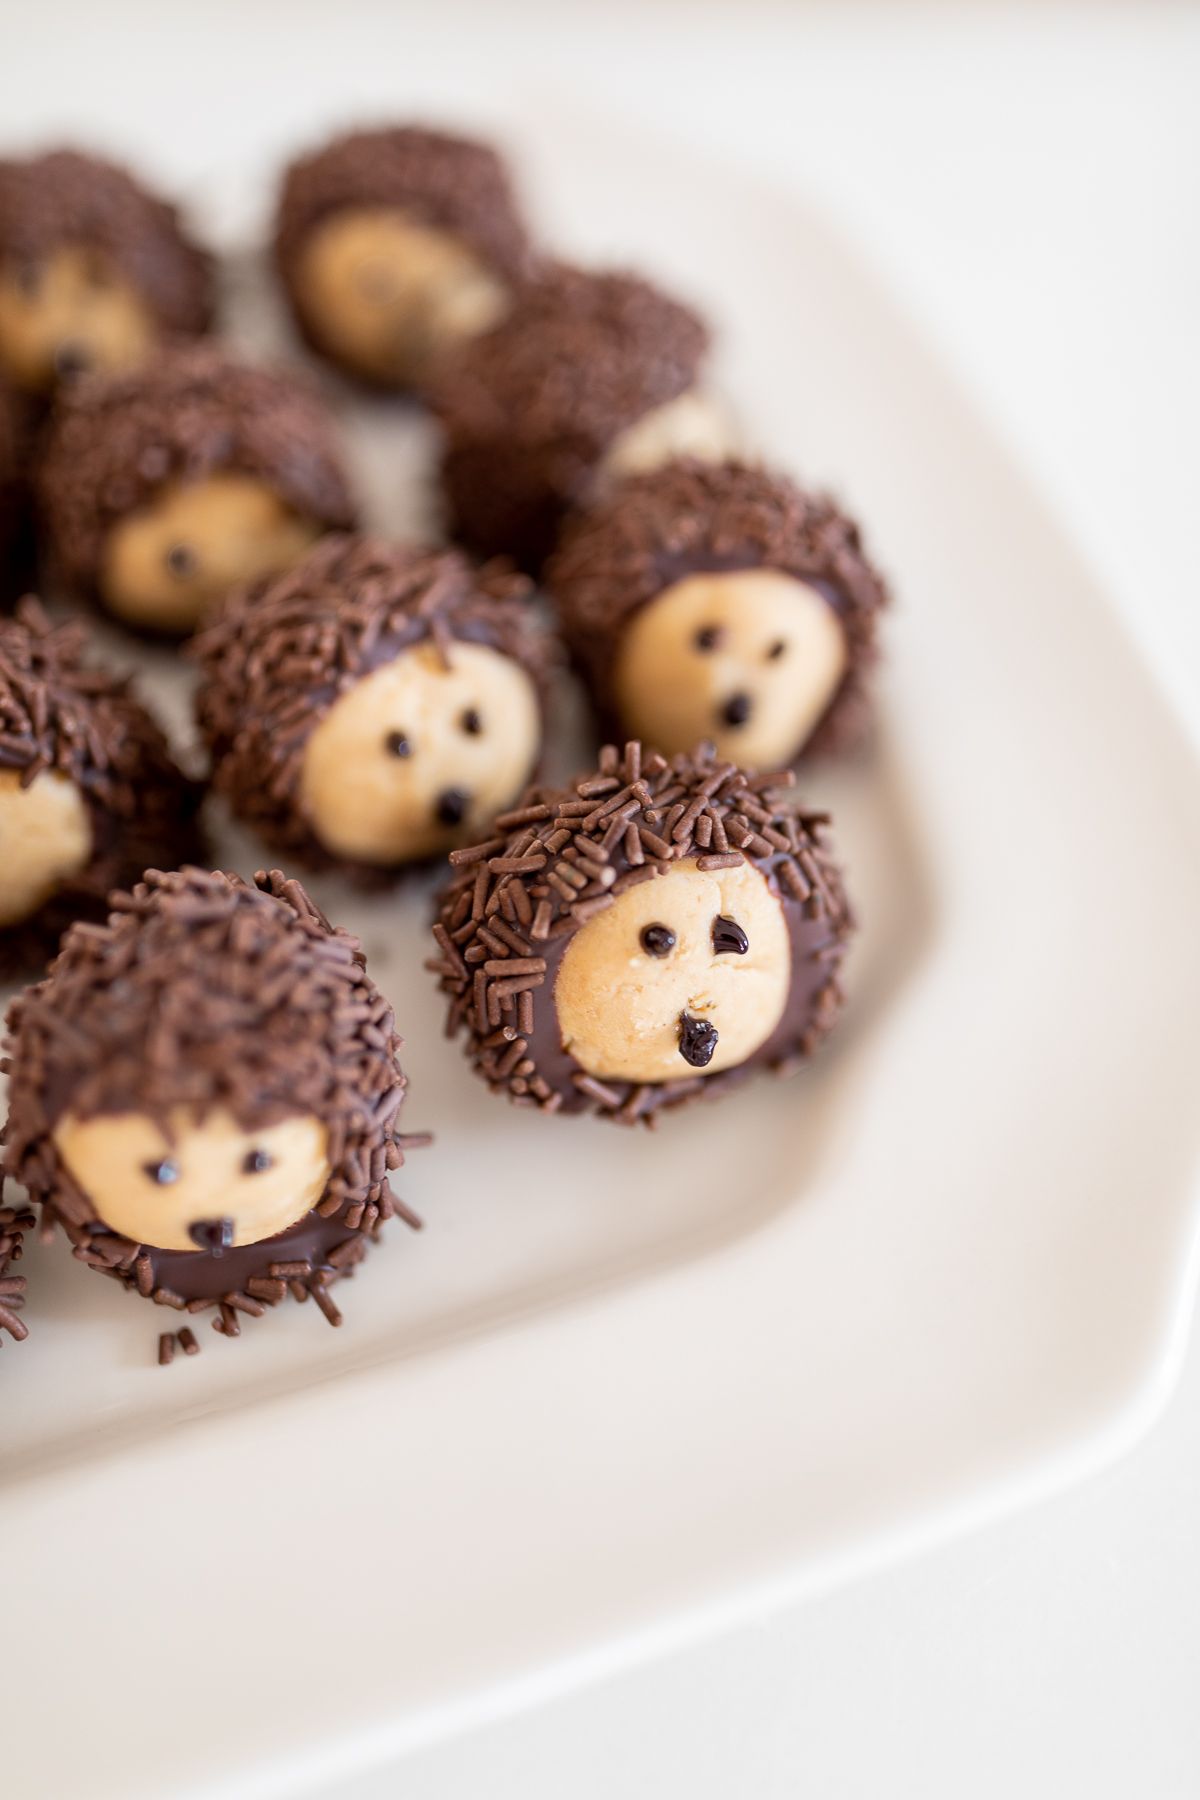 Buckeye balls shaped into hedgehogs on a white platter.